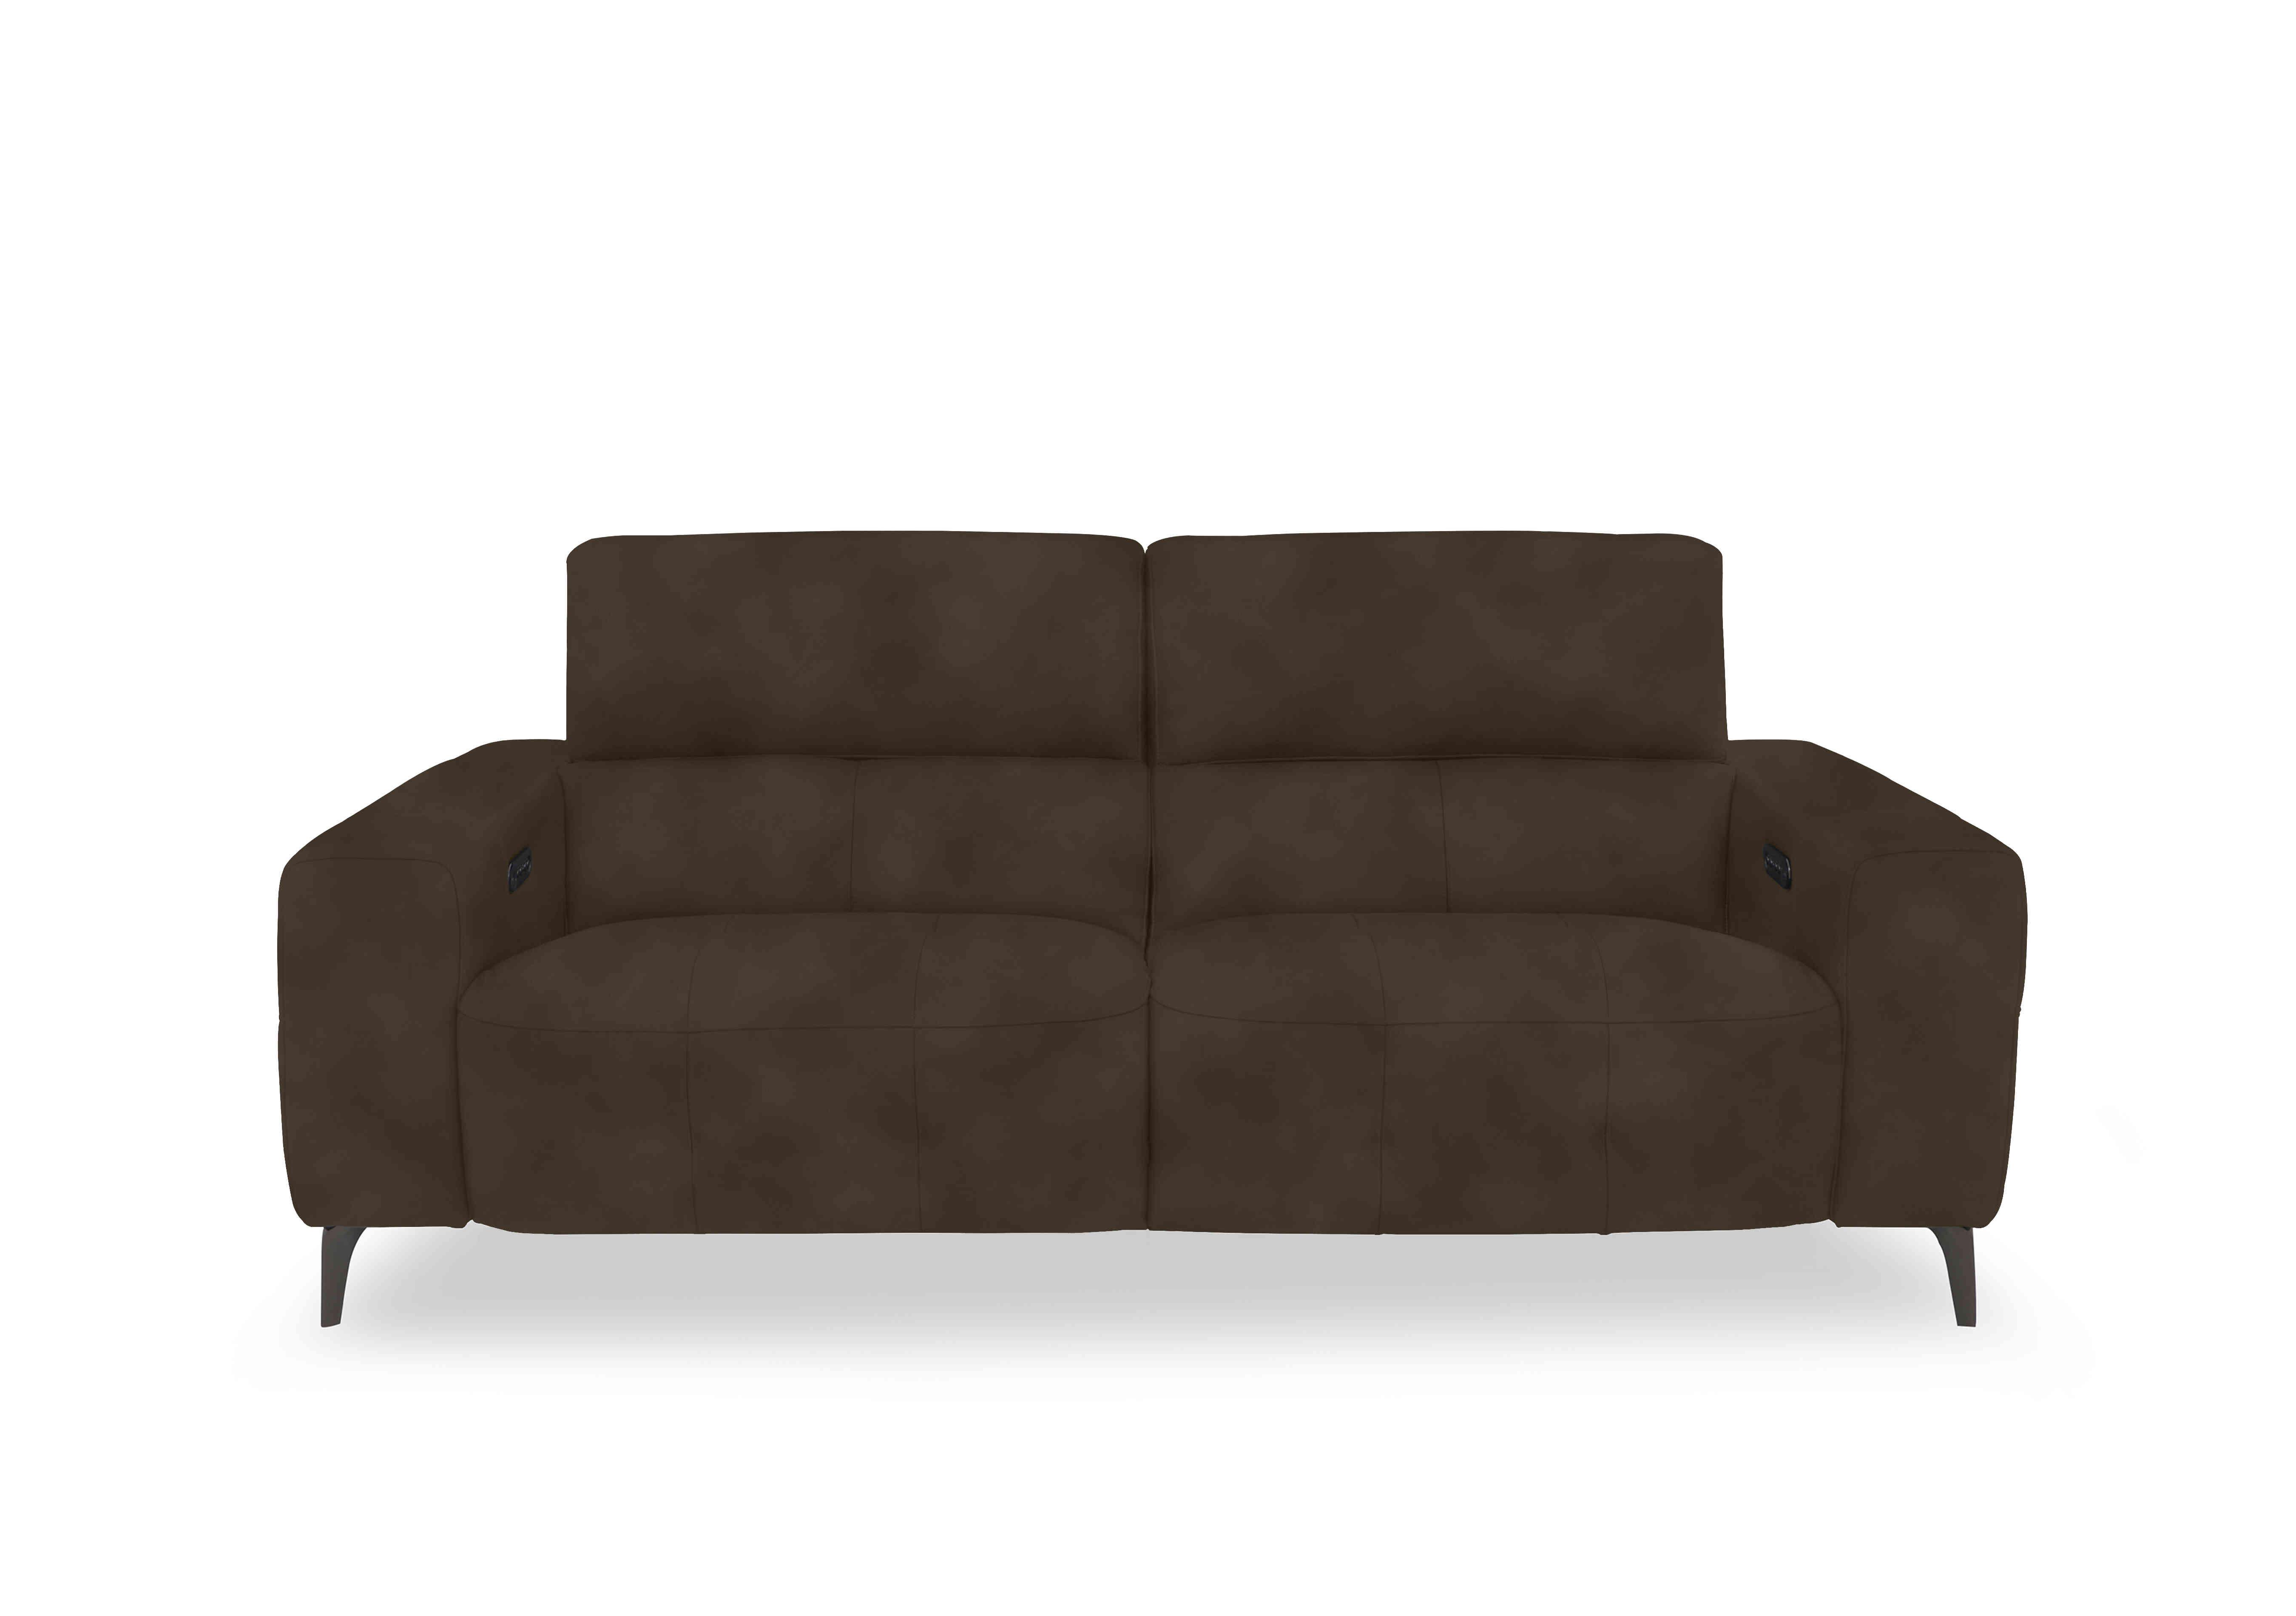 New York 3 Seater Fabric Sofa in Sfa-Pey-R04 Dark Chocolate on Furniture Village